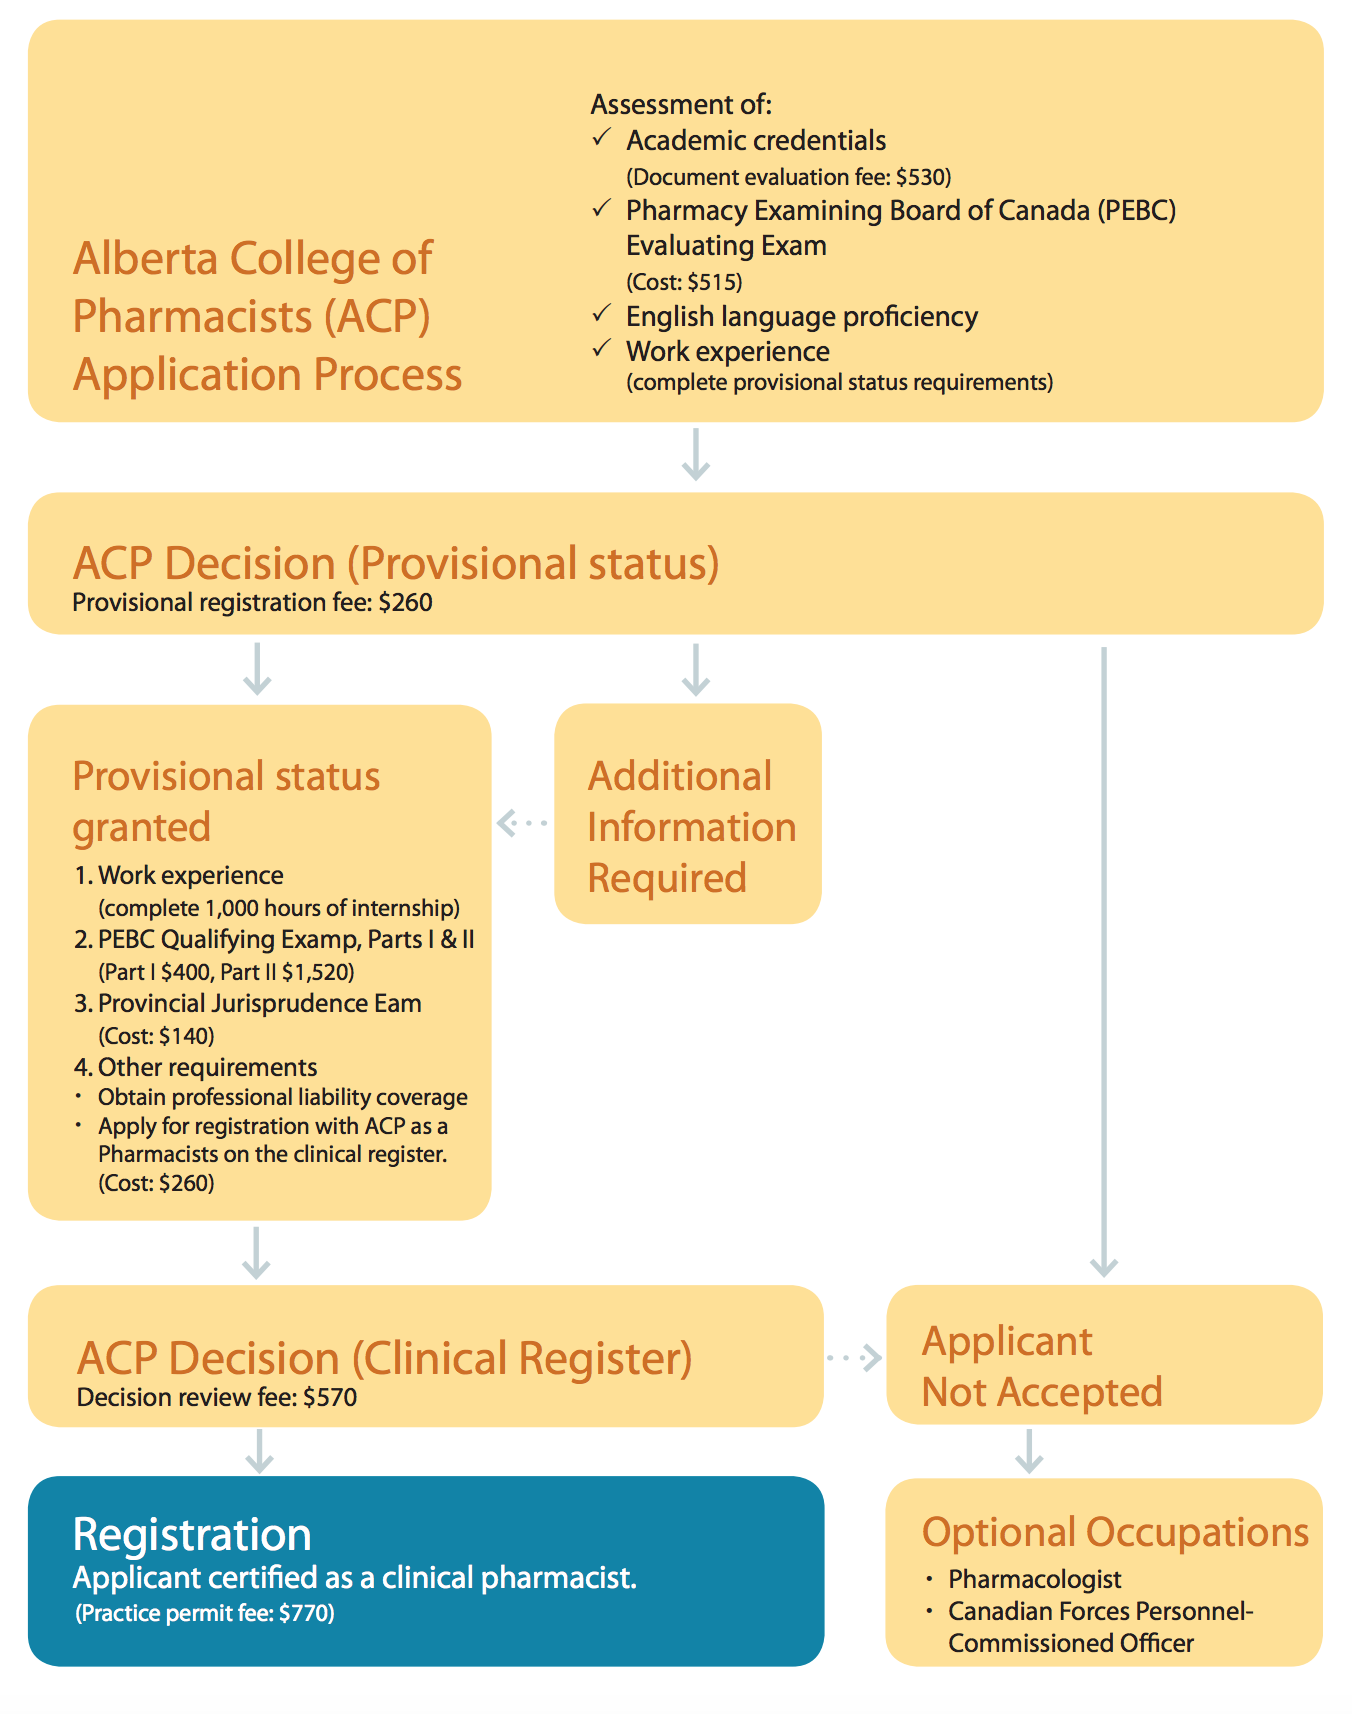 PEBC Exam for Alberta province